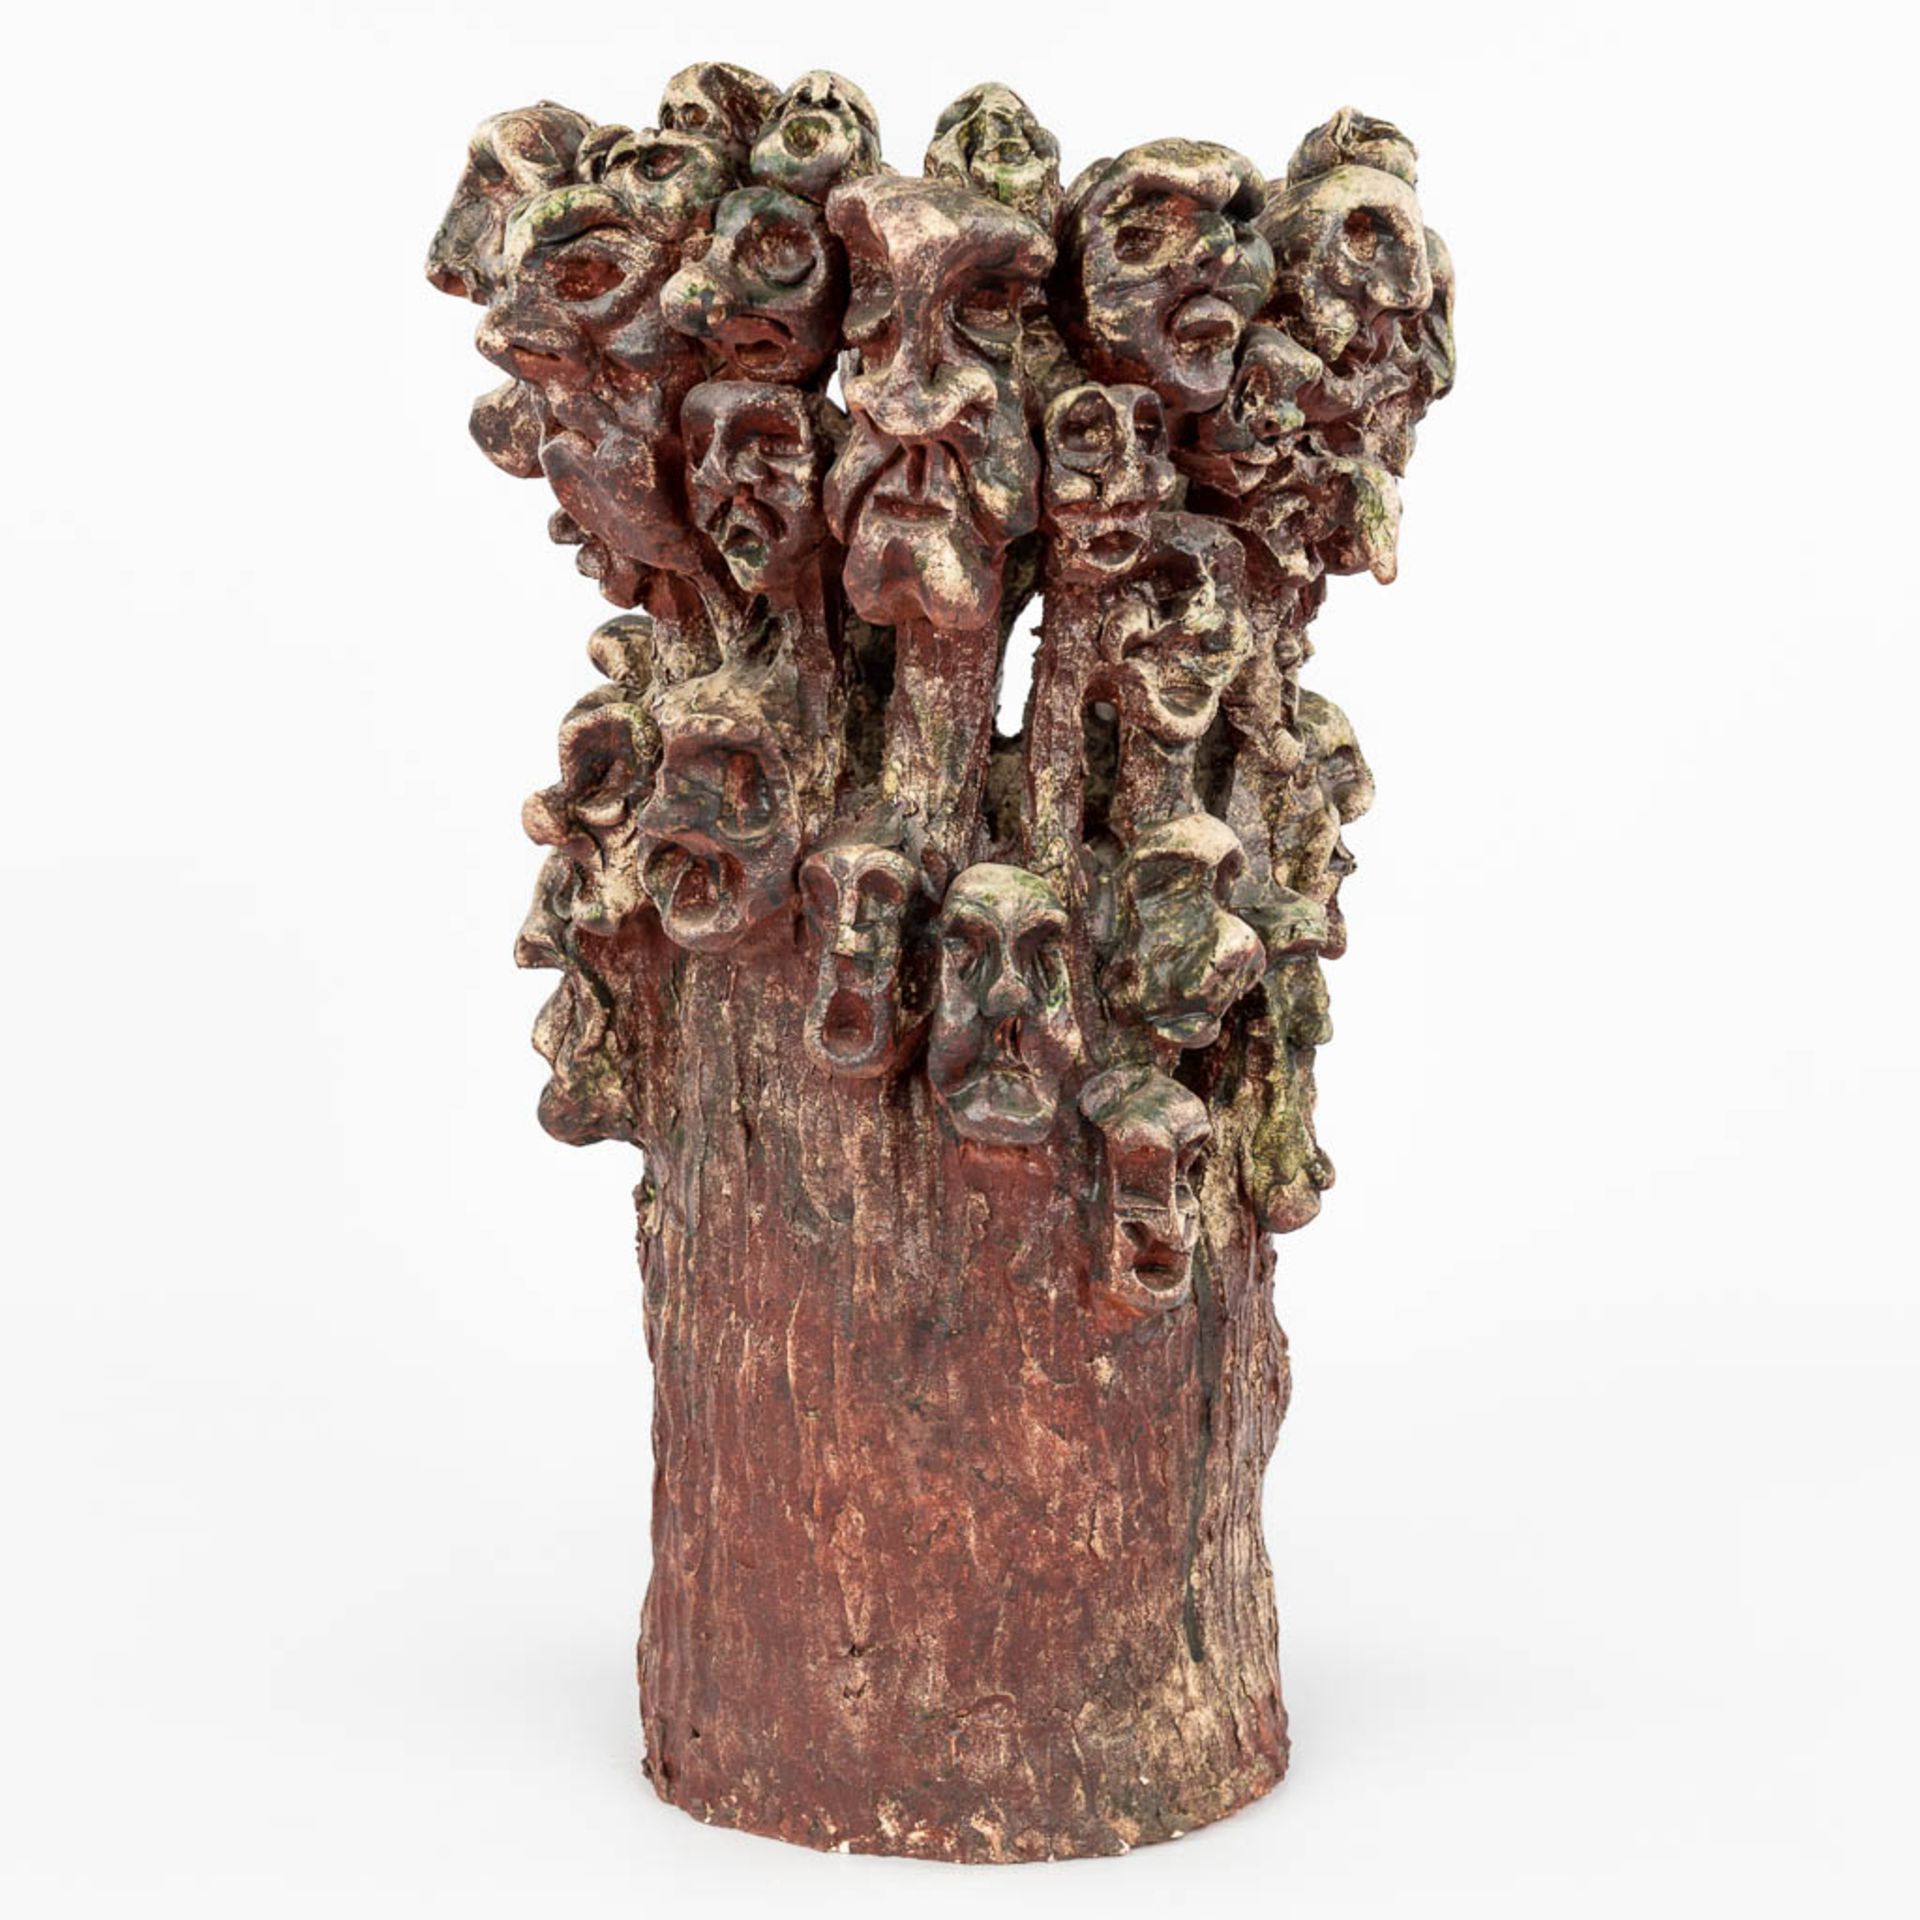 A vase made of glazed ceramics 'The Underworld'. (H:43cm) - Image 7 of 13